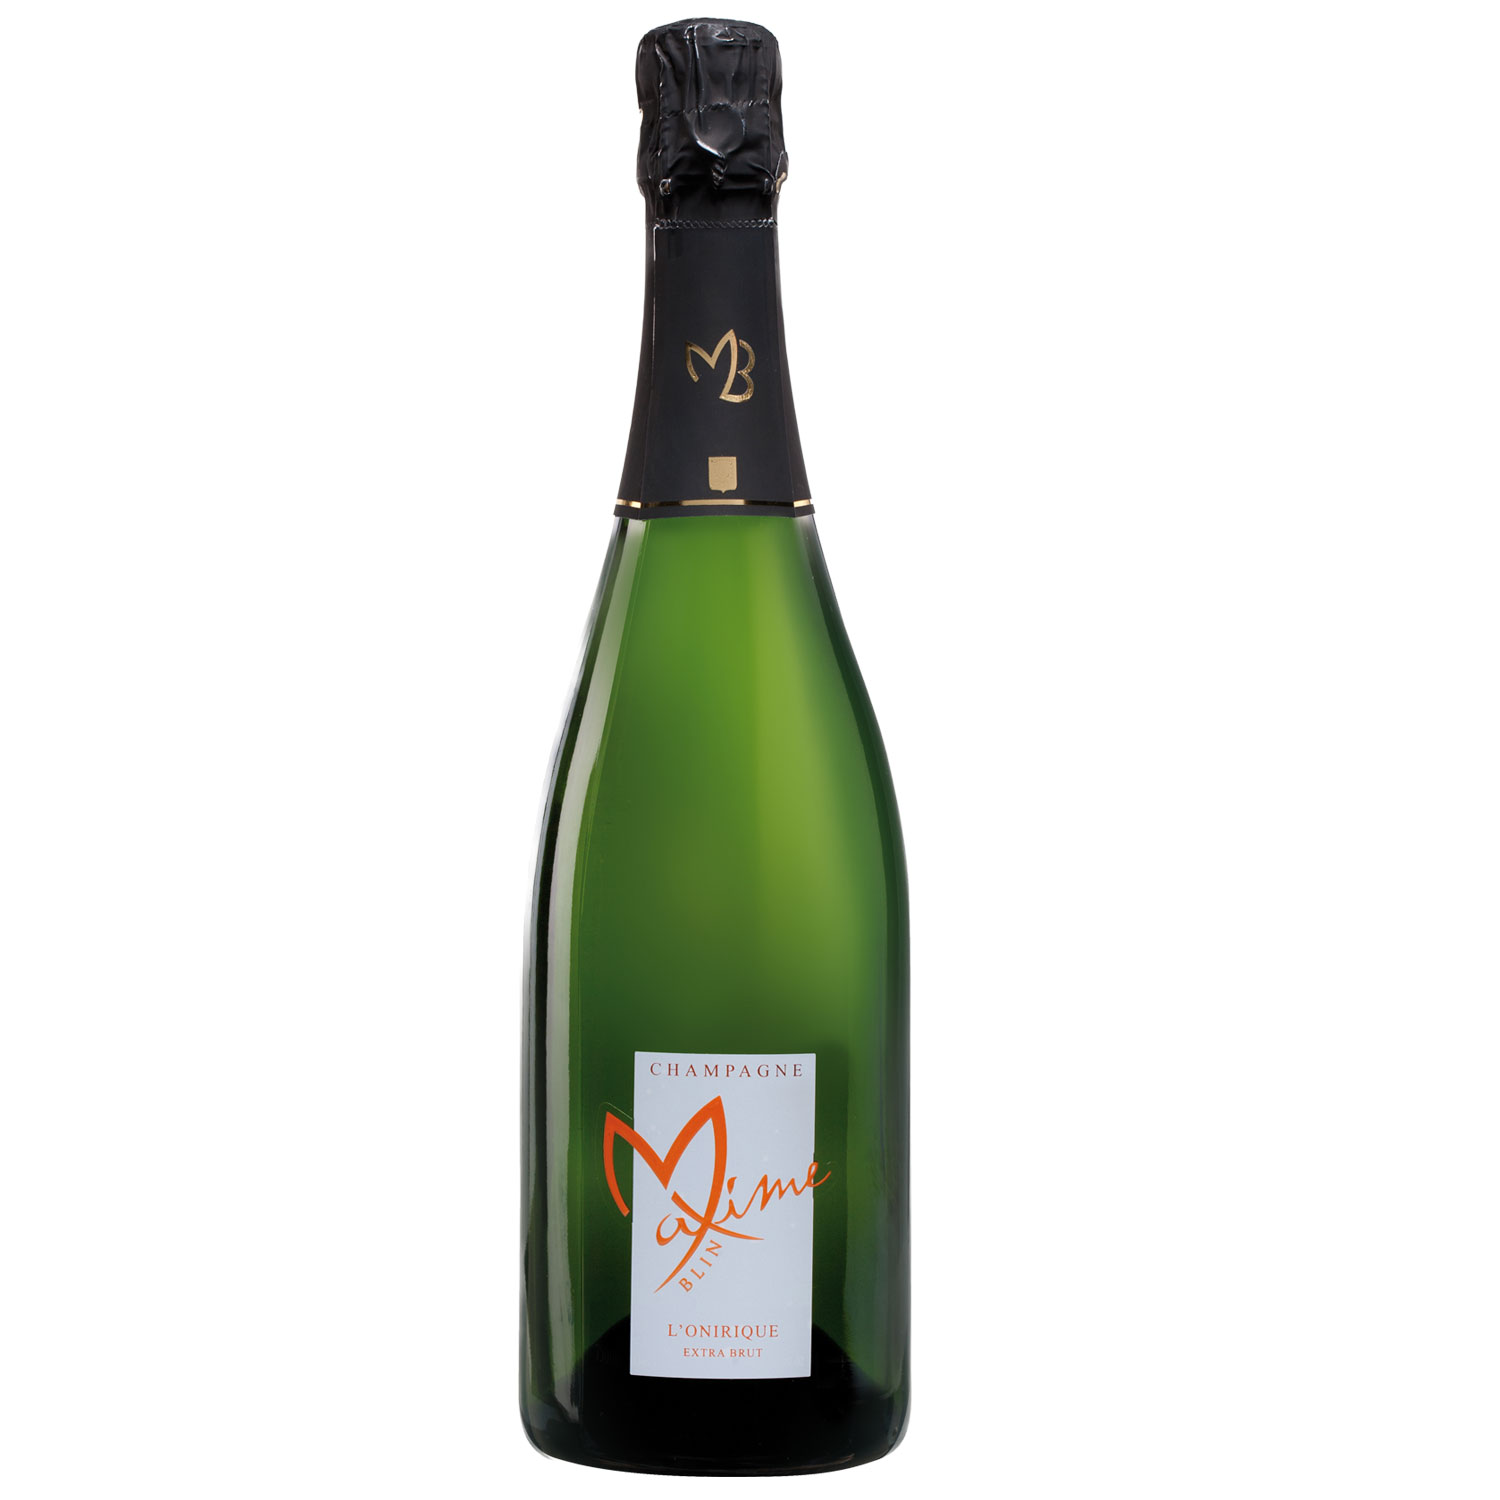 Champagne Maxime Blin: L'Onirique Extra Brut